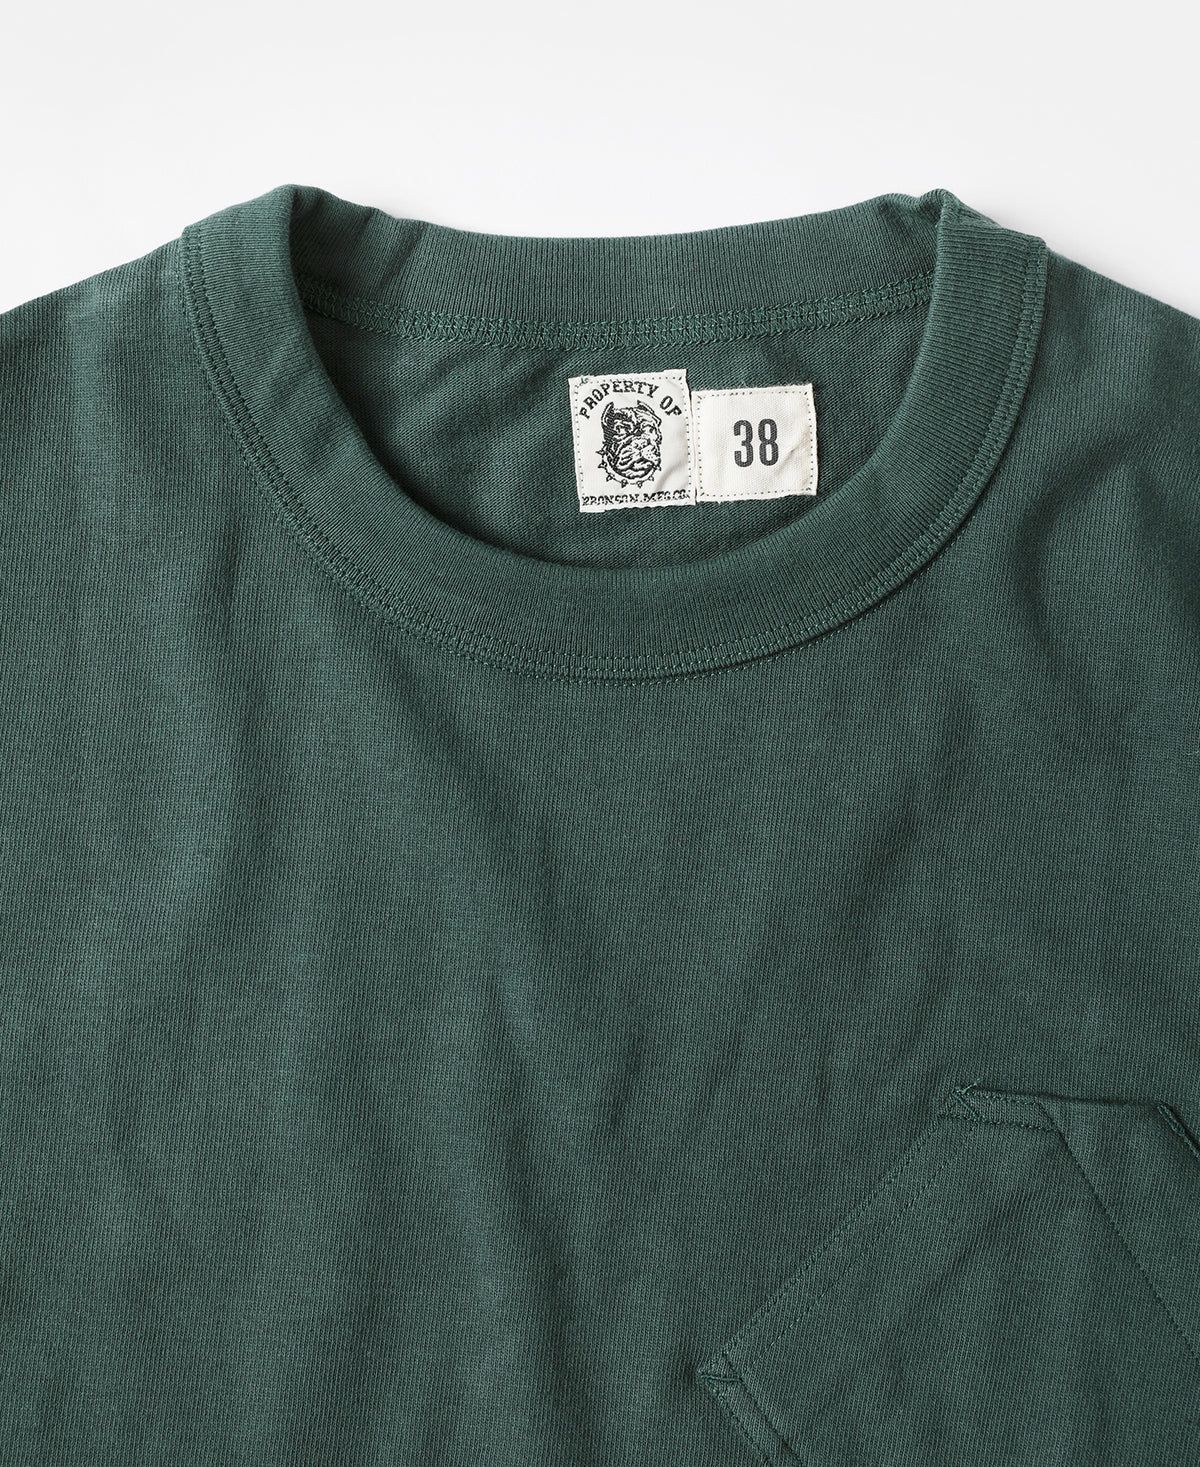 1930s Slanted Pocket Tubular T-Shirt - Green